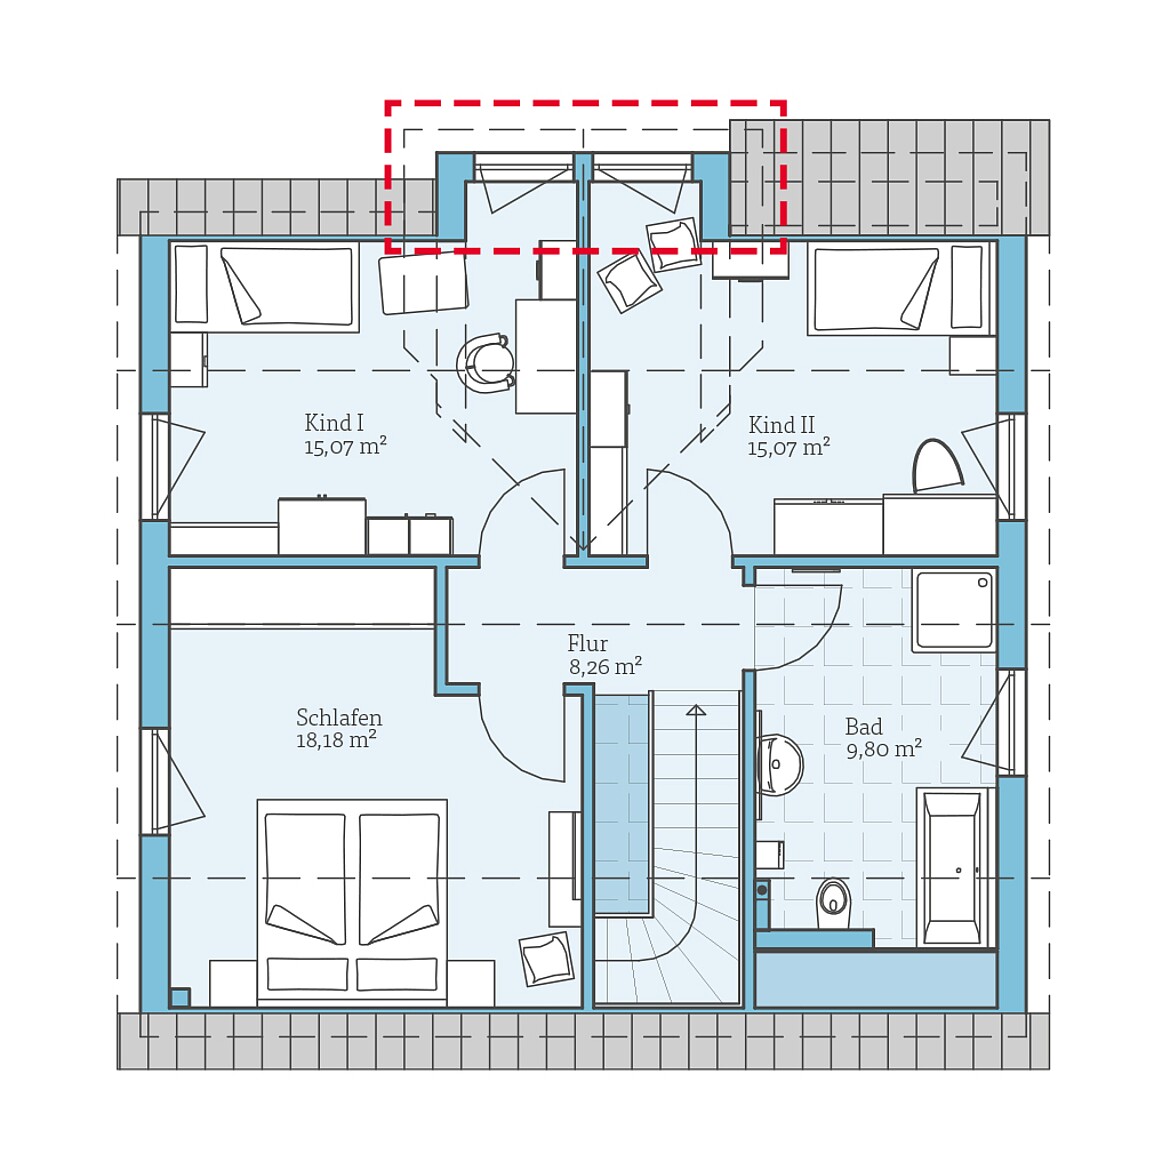 Prefabricated house Variant 35-137: Top floor plan option